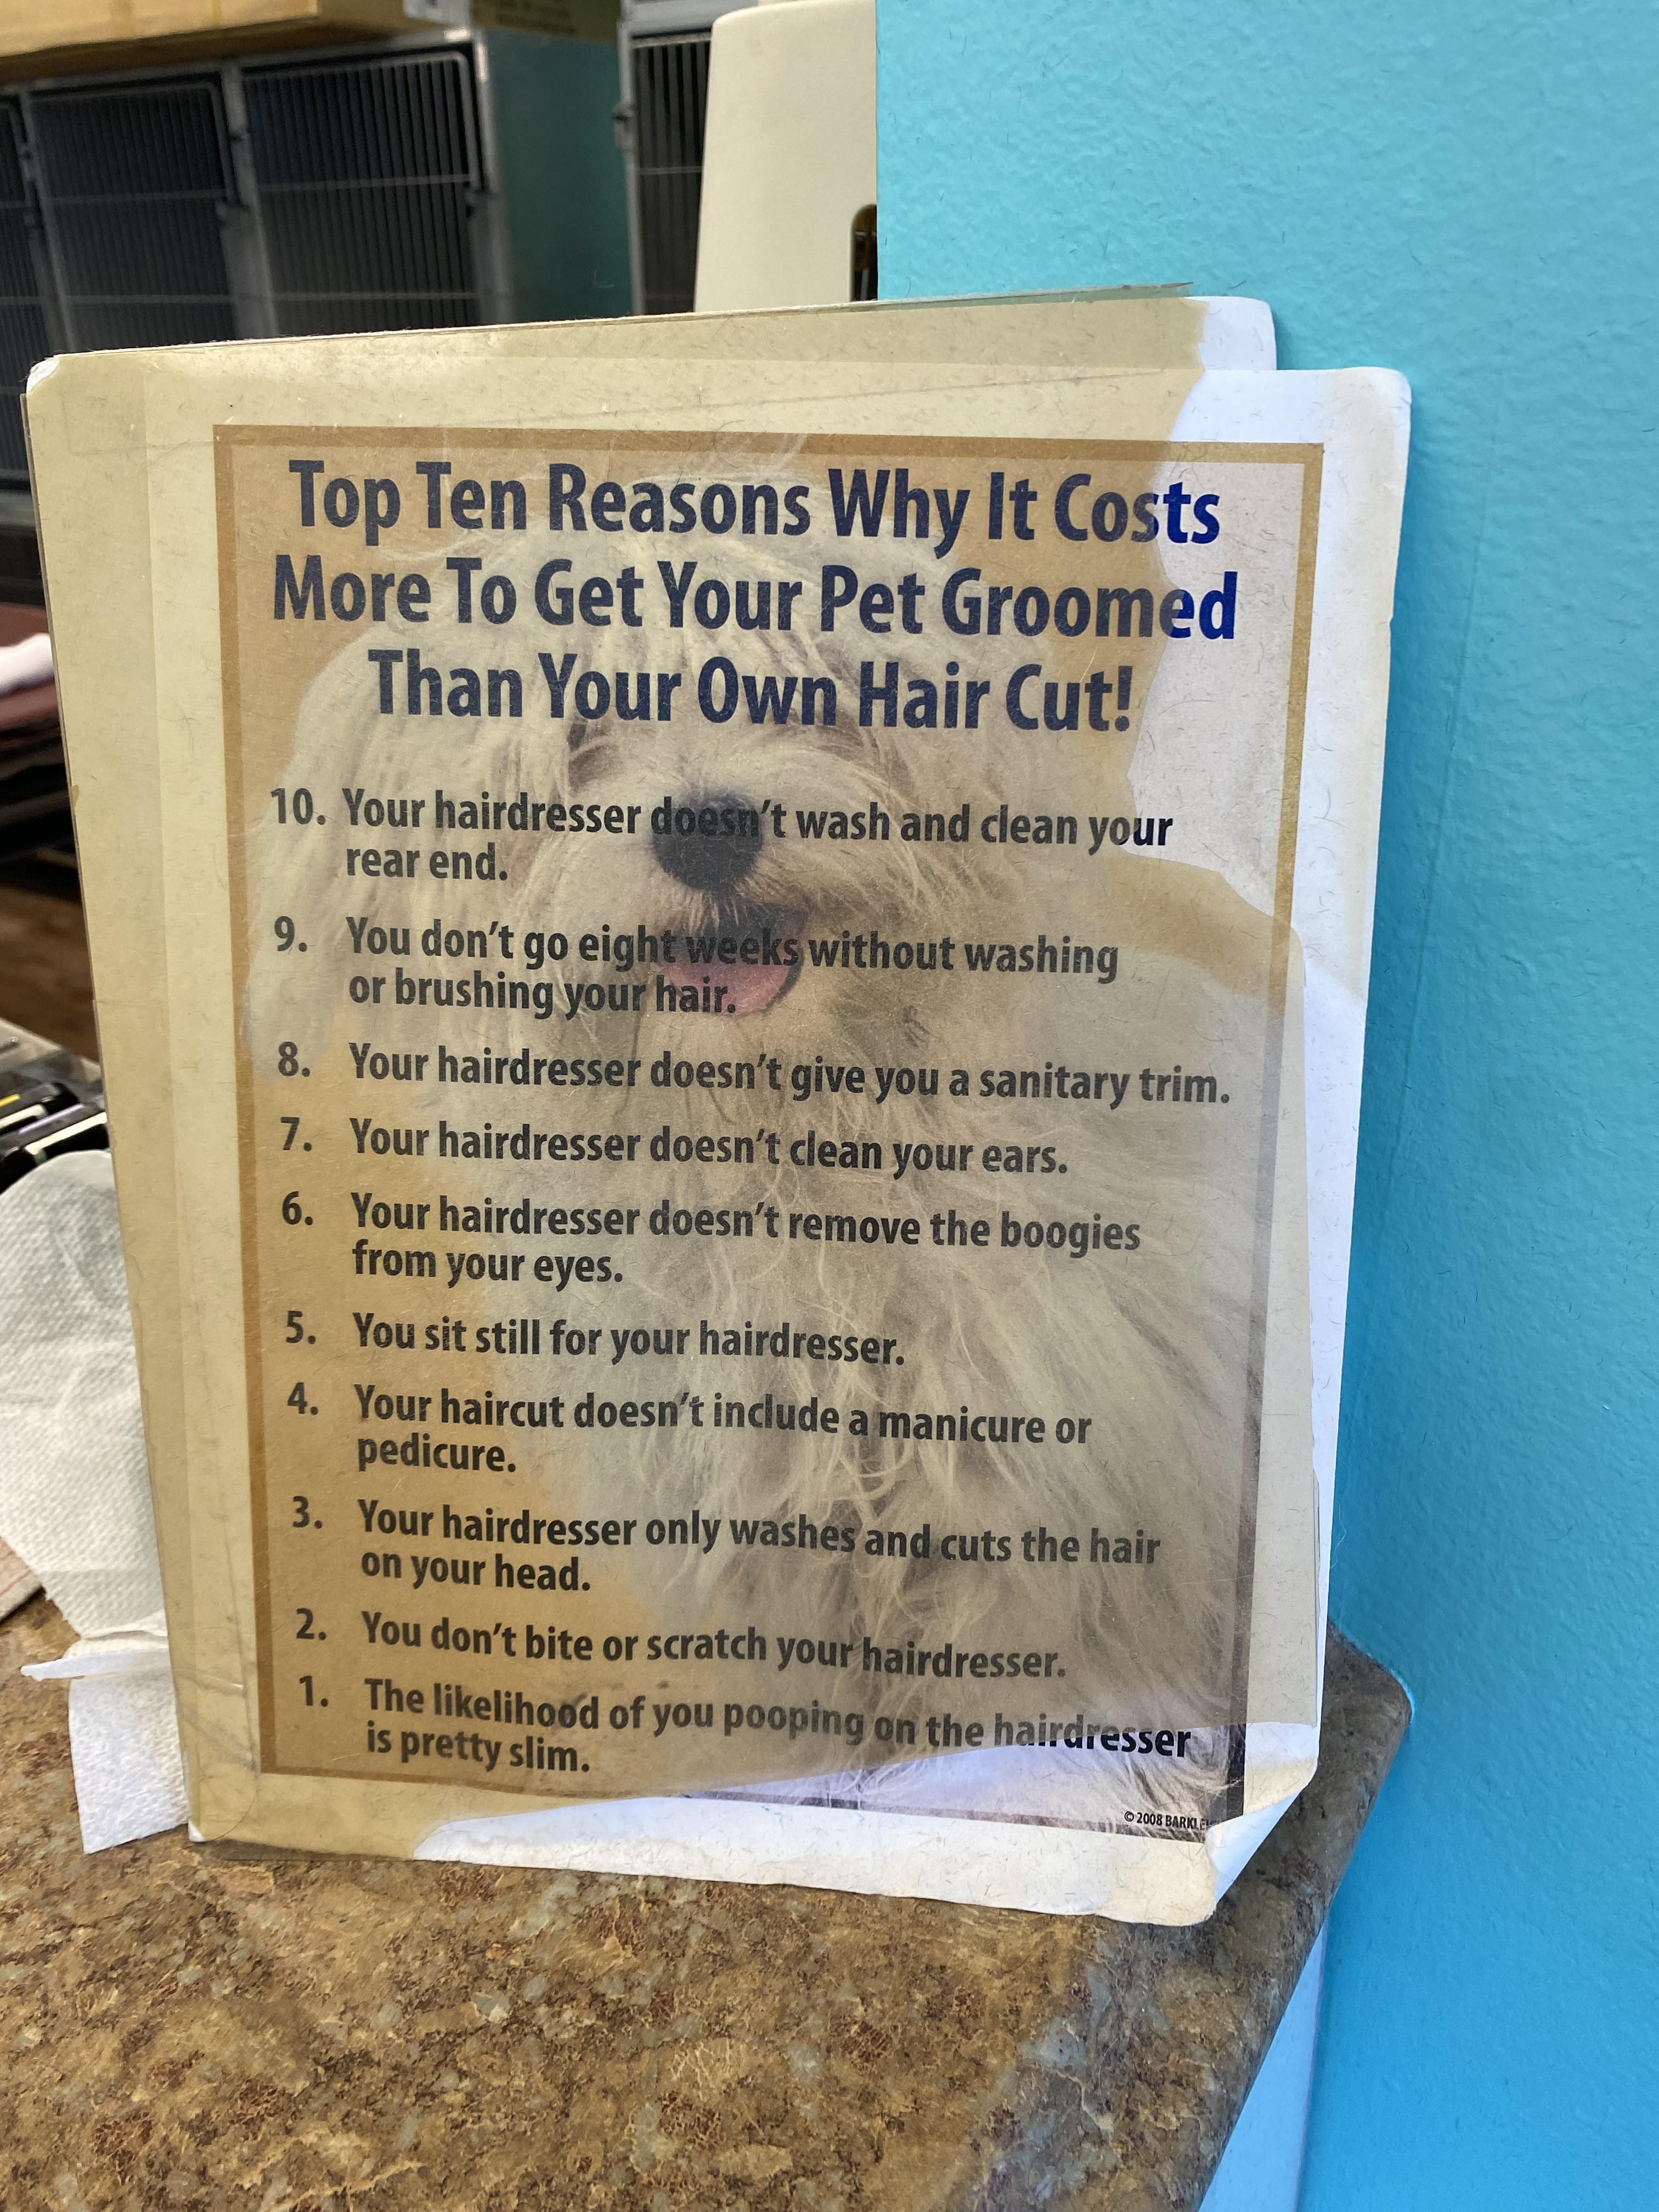 This sign at my dog groomer